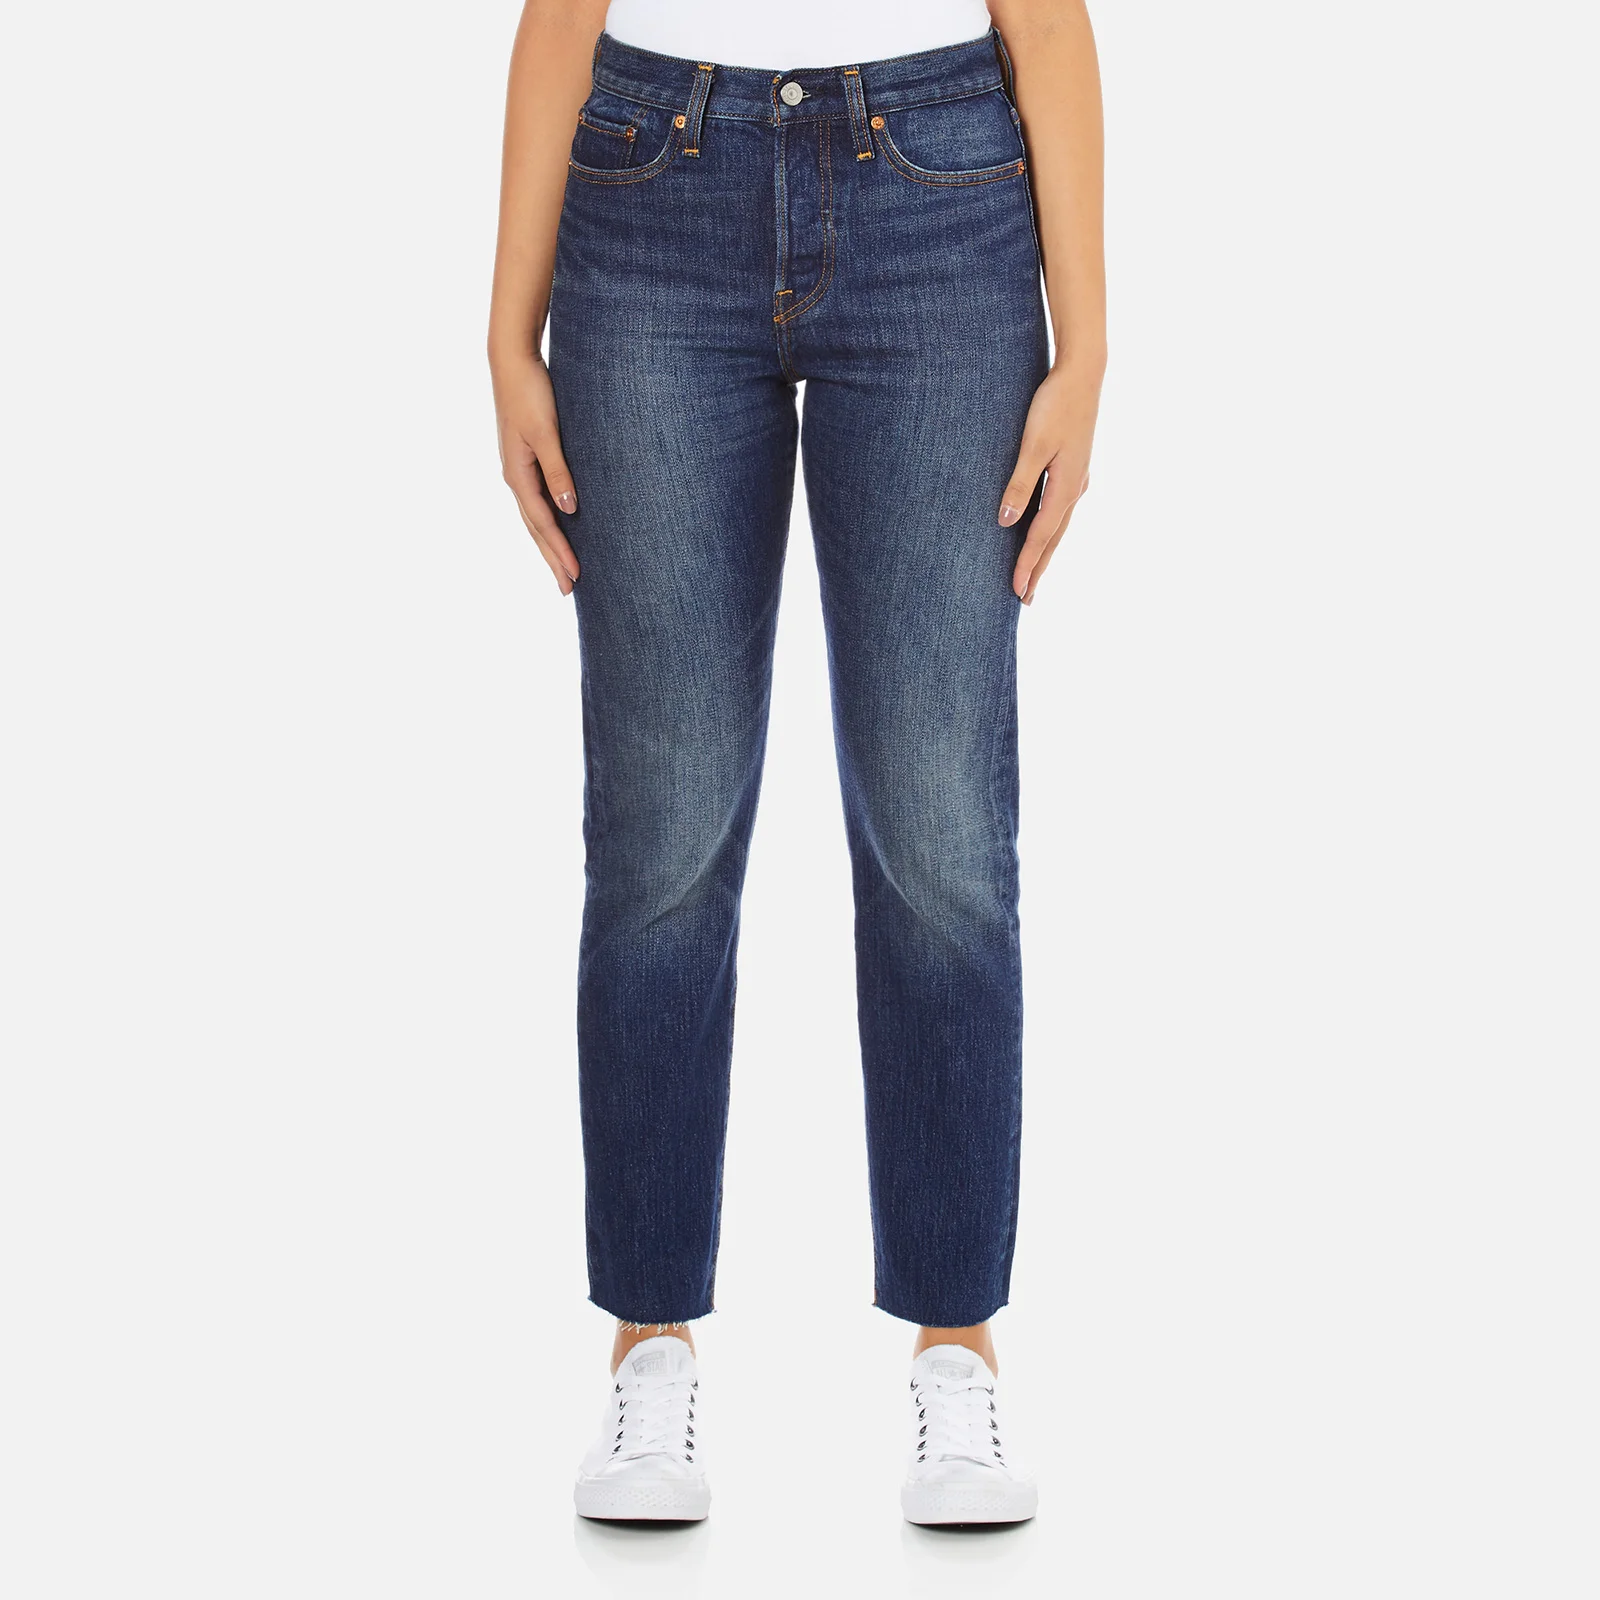 Levi's Women's Wedgie Fit Jeans - Classic Tint Image 1